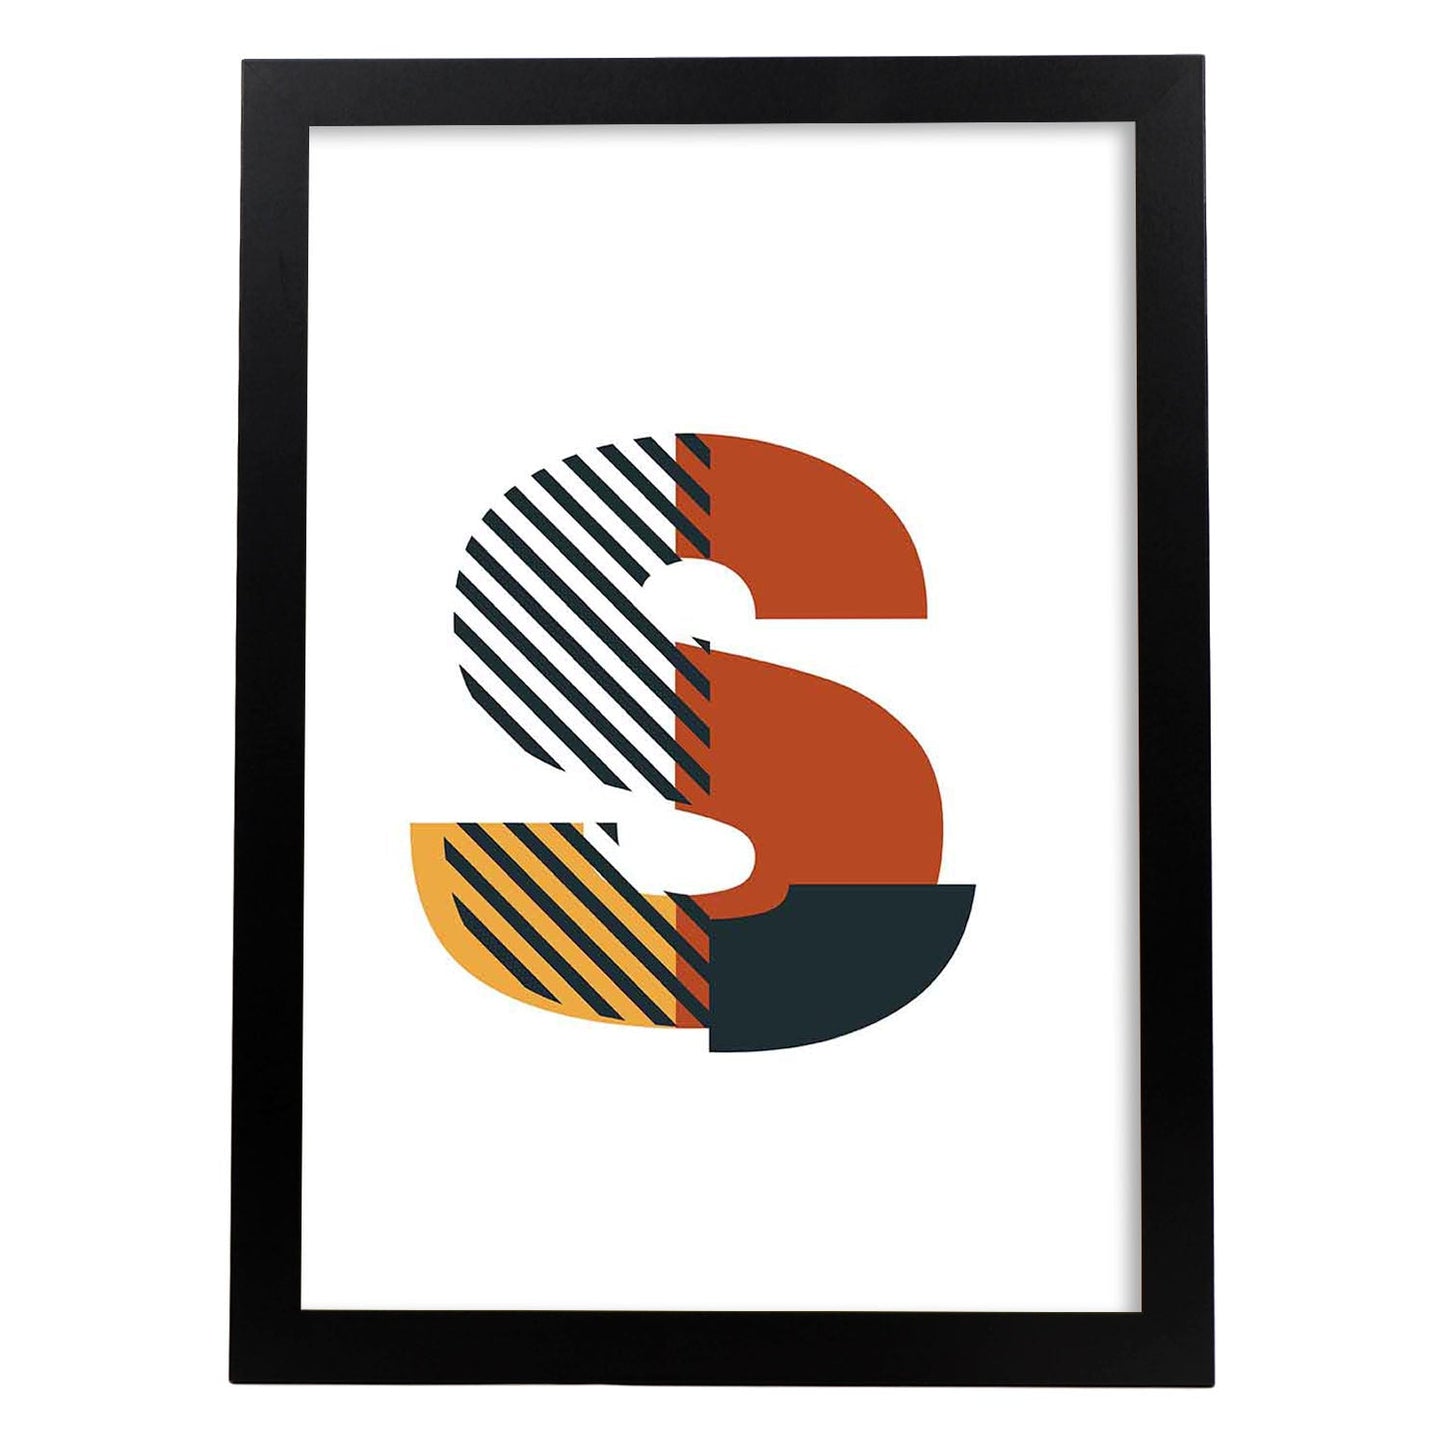 Poster de letra S. Lámina estilo Geometria con imágenes del alfabeto.-Artwork-Nacnic-A3-Marco Negro-Nacnic Estudio SL